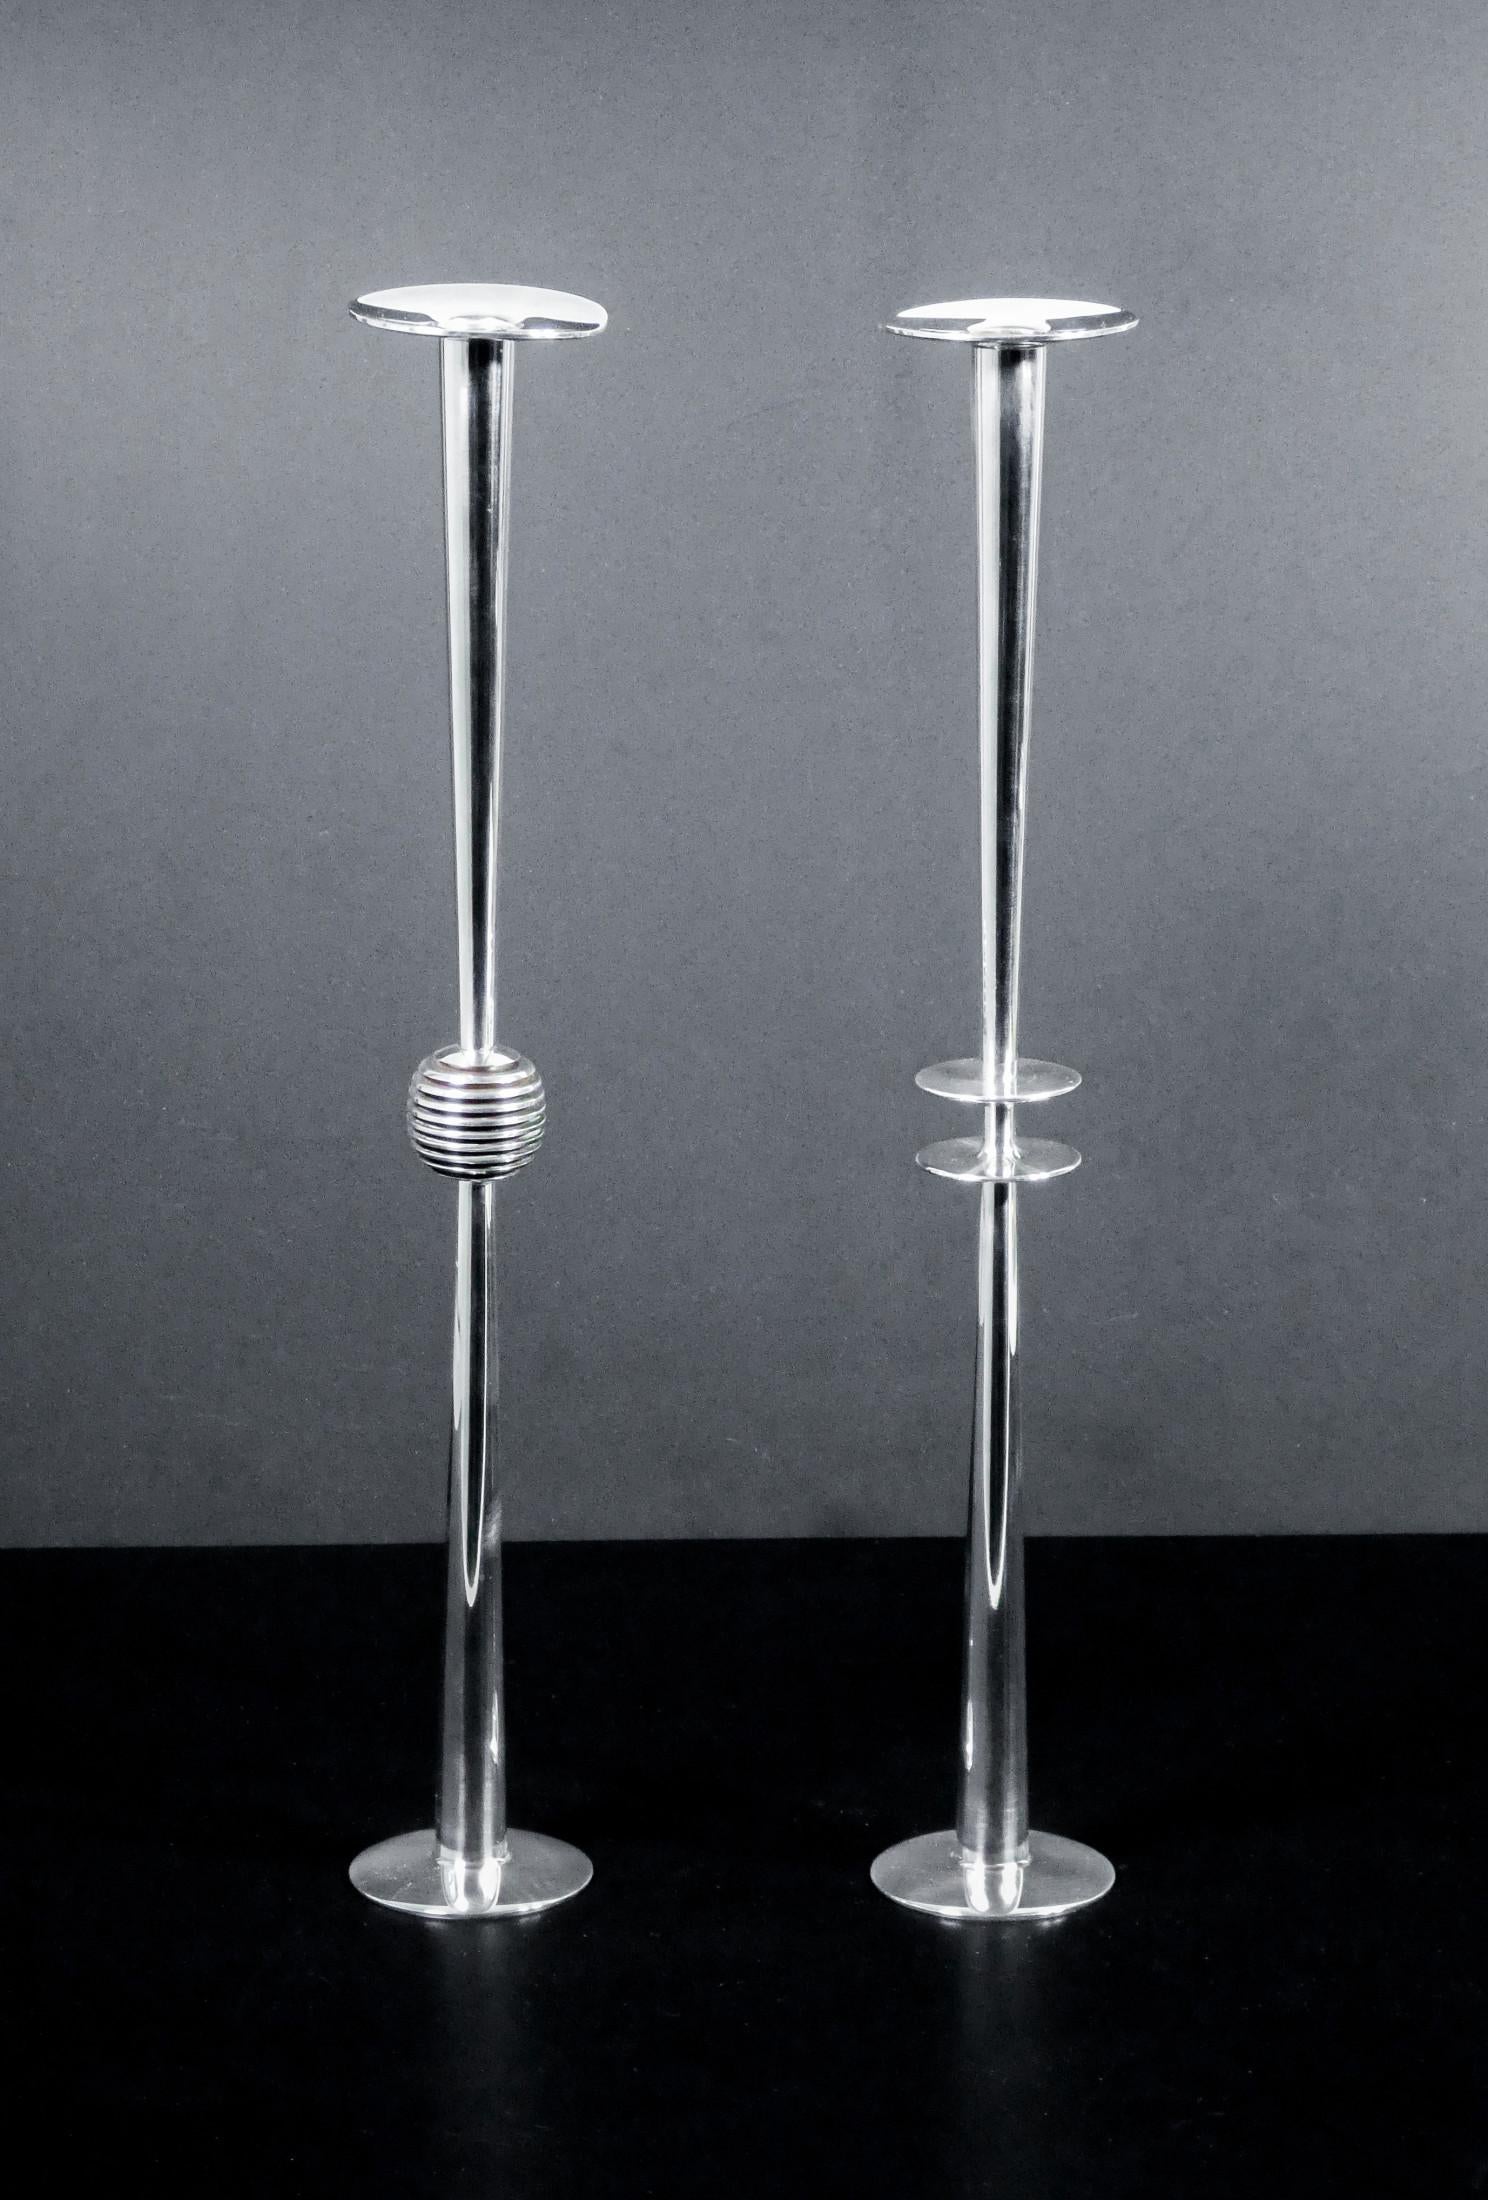 Pair of candlesticks
designed by Lino SABATTINI
for Argenteria Sabattini
in silvered metal.

ORIGIN
Italy

PERIOD
70s/80s

DESIGNER
Linen SABATTINI was born in Correggio (Reggio Emilia) on 23 September 1925 from simple and industrious